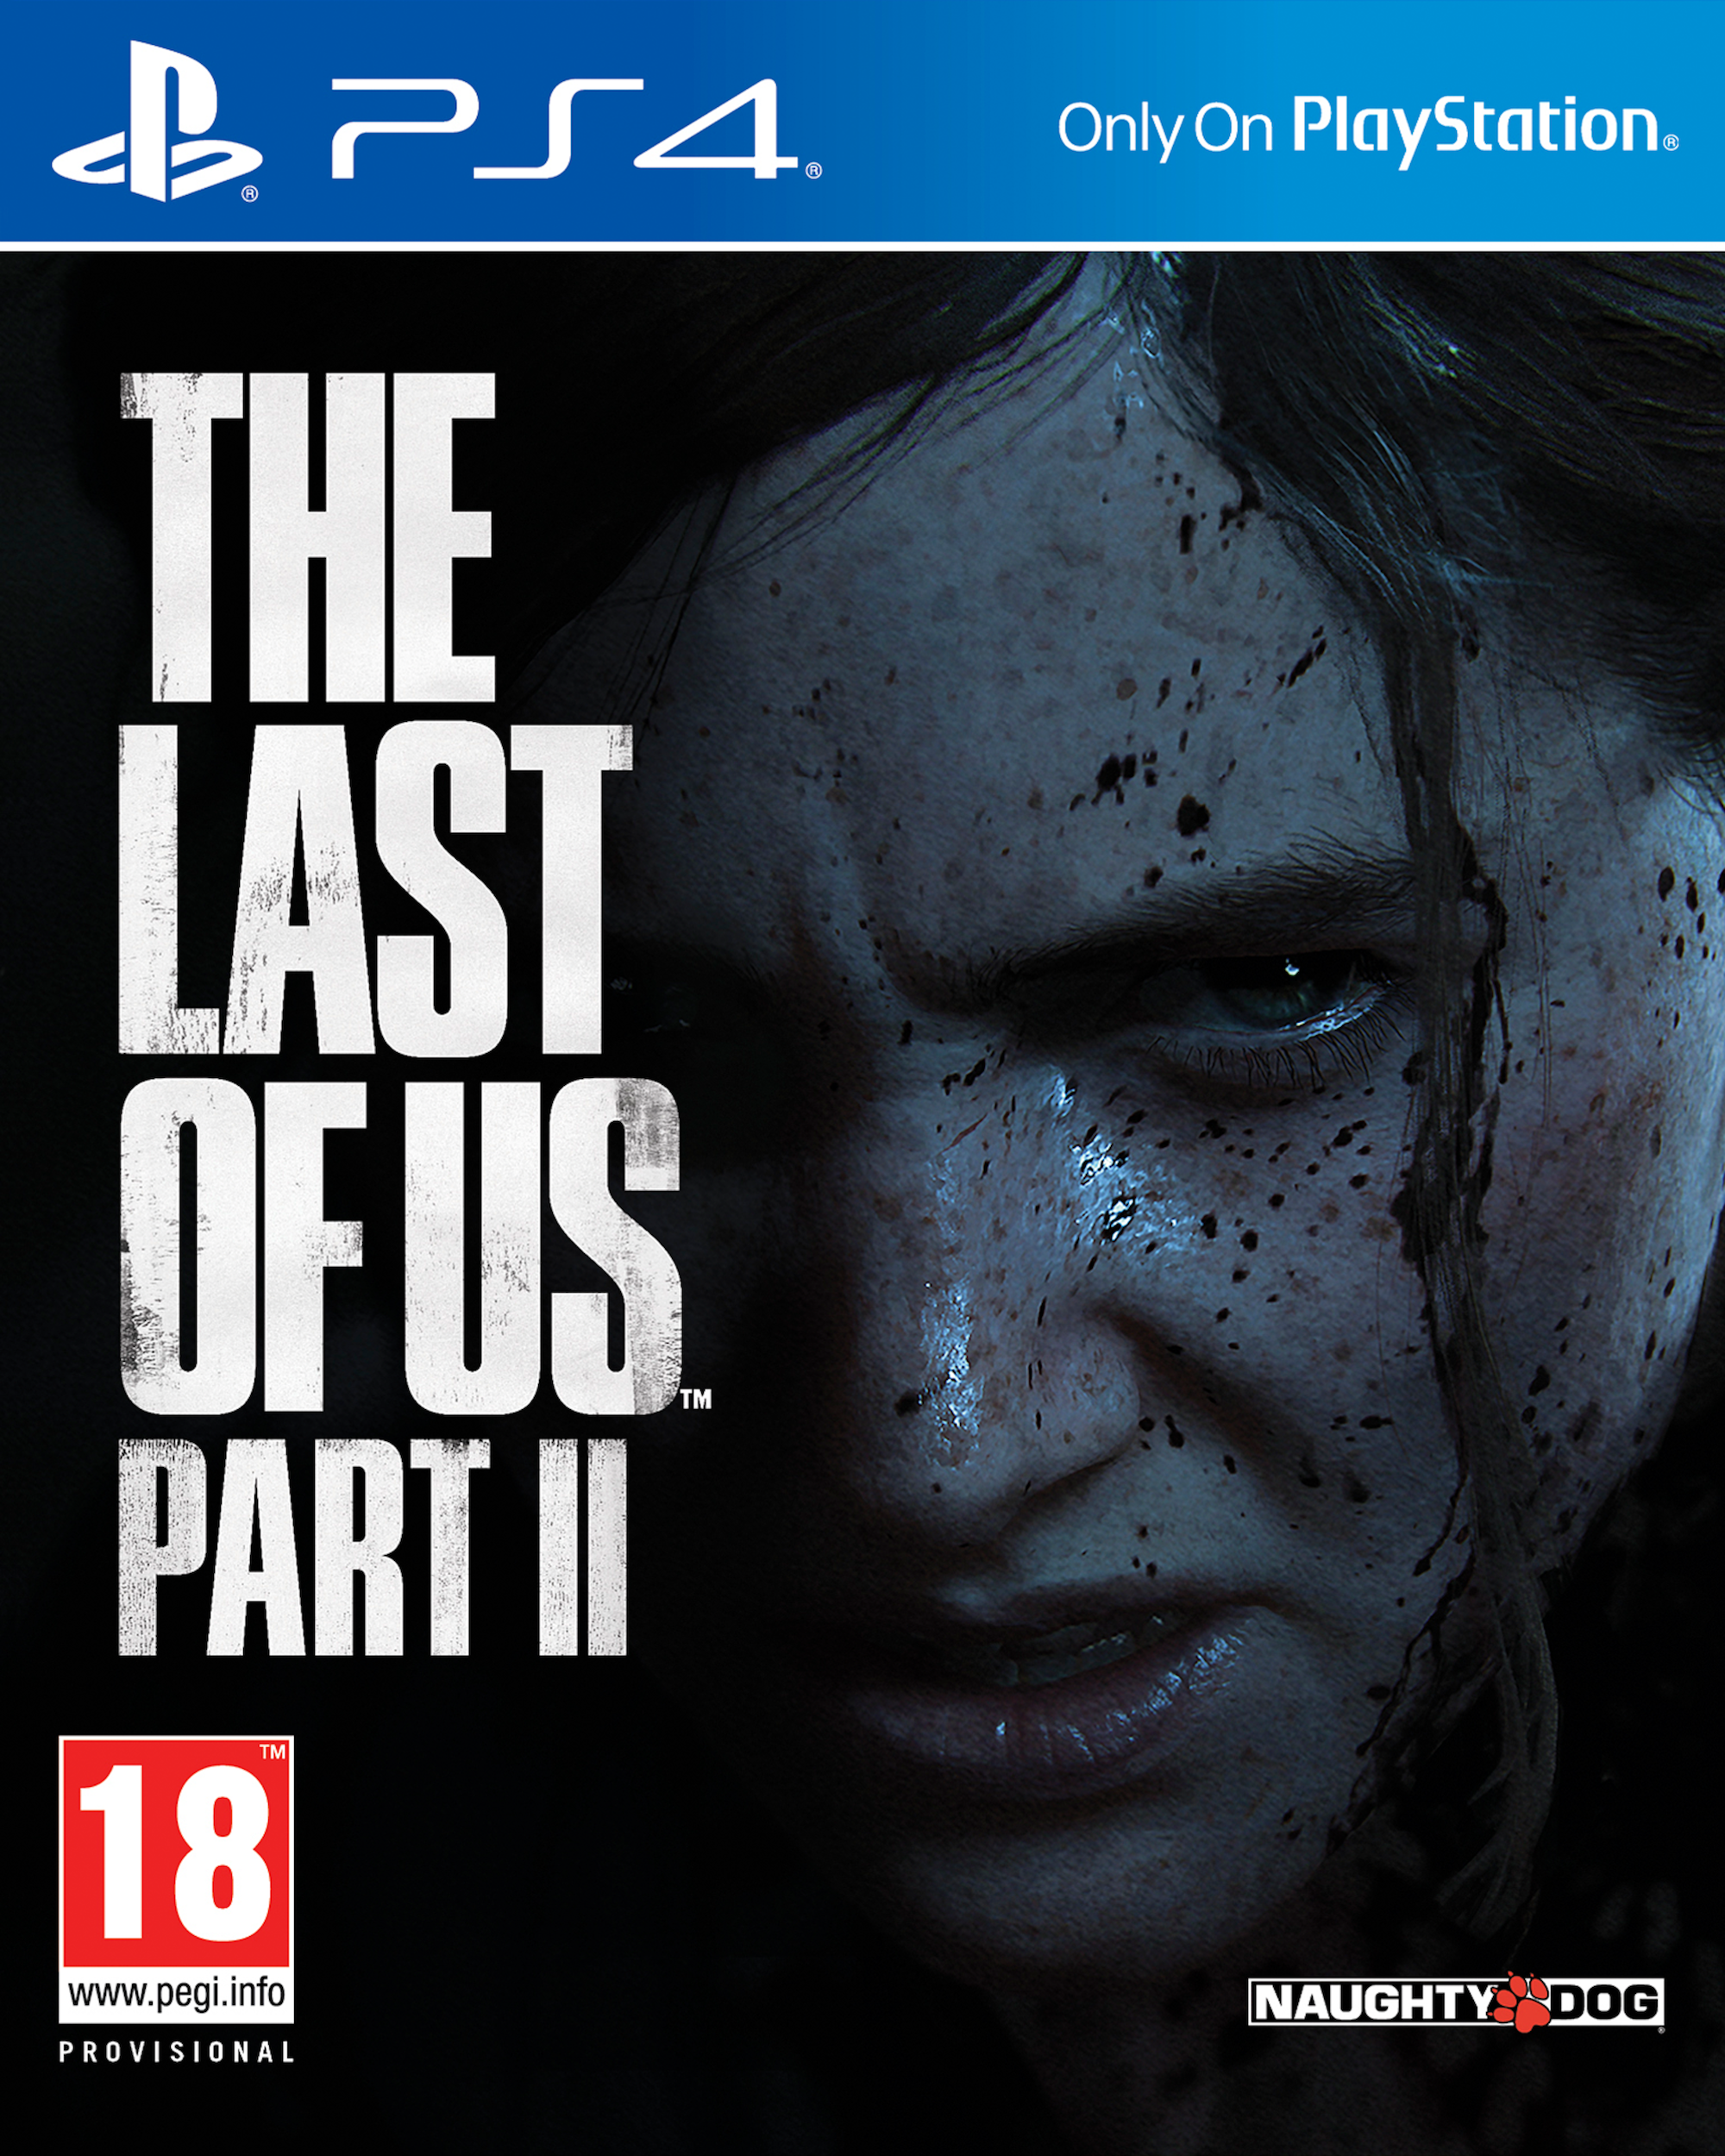 The Last of Us Part II. The Last of Us